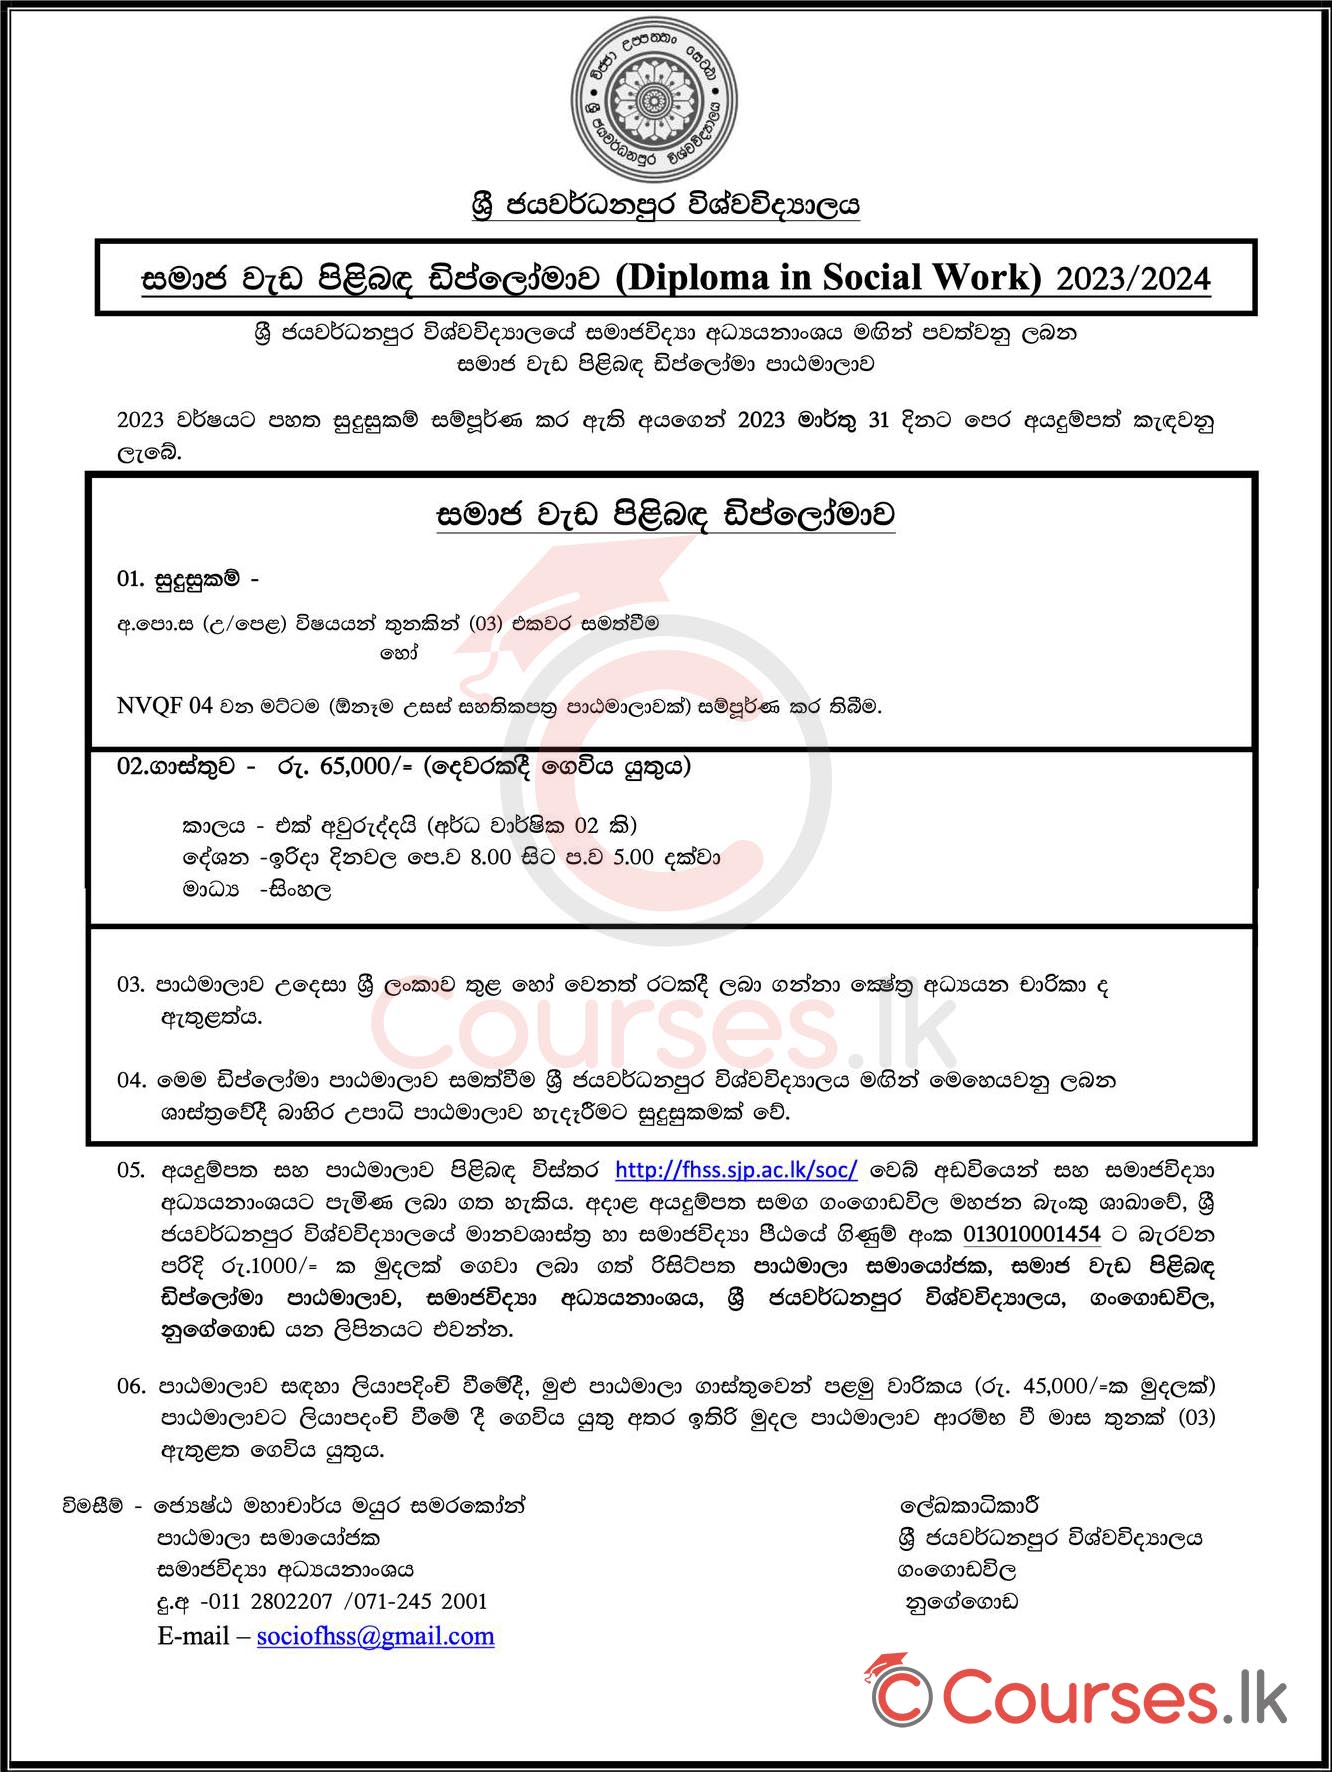 Call for Applications - Diploma in Social Work (2023/2024) - University of Sri Jayewardenepura